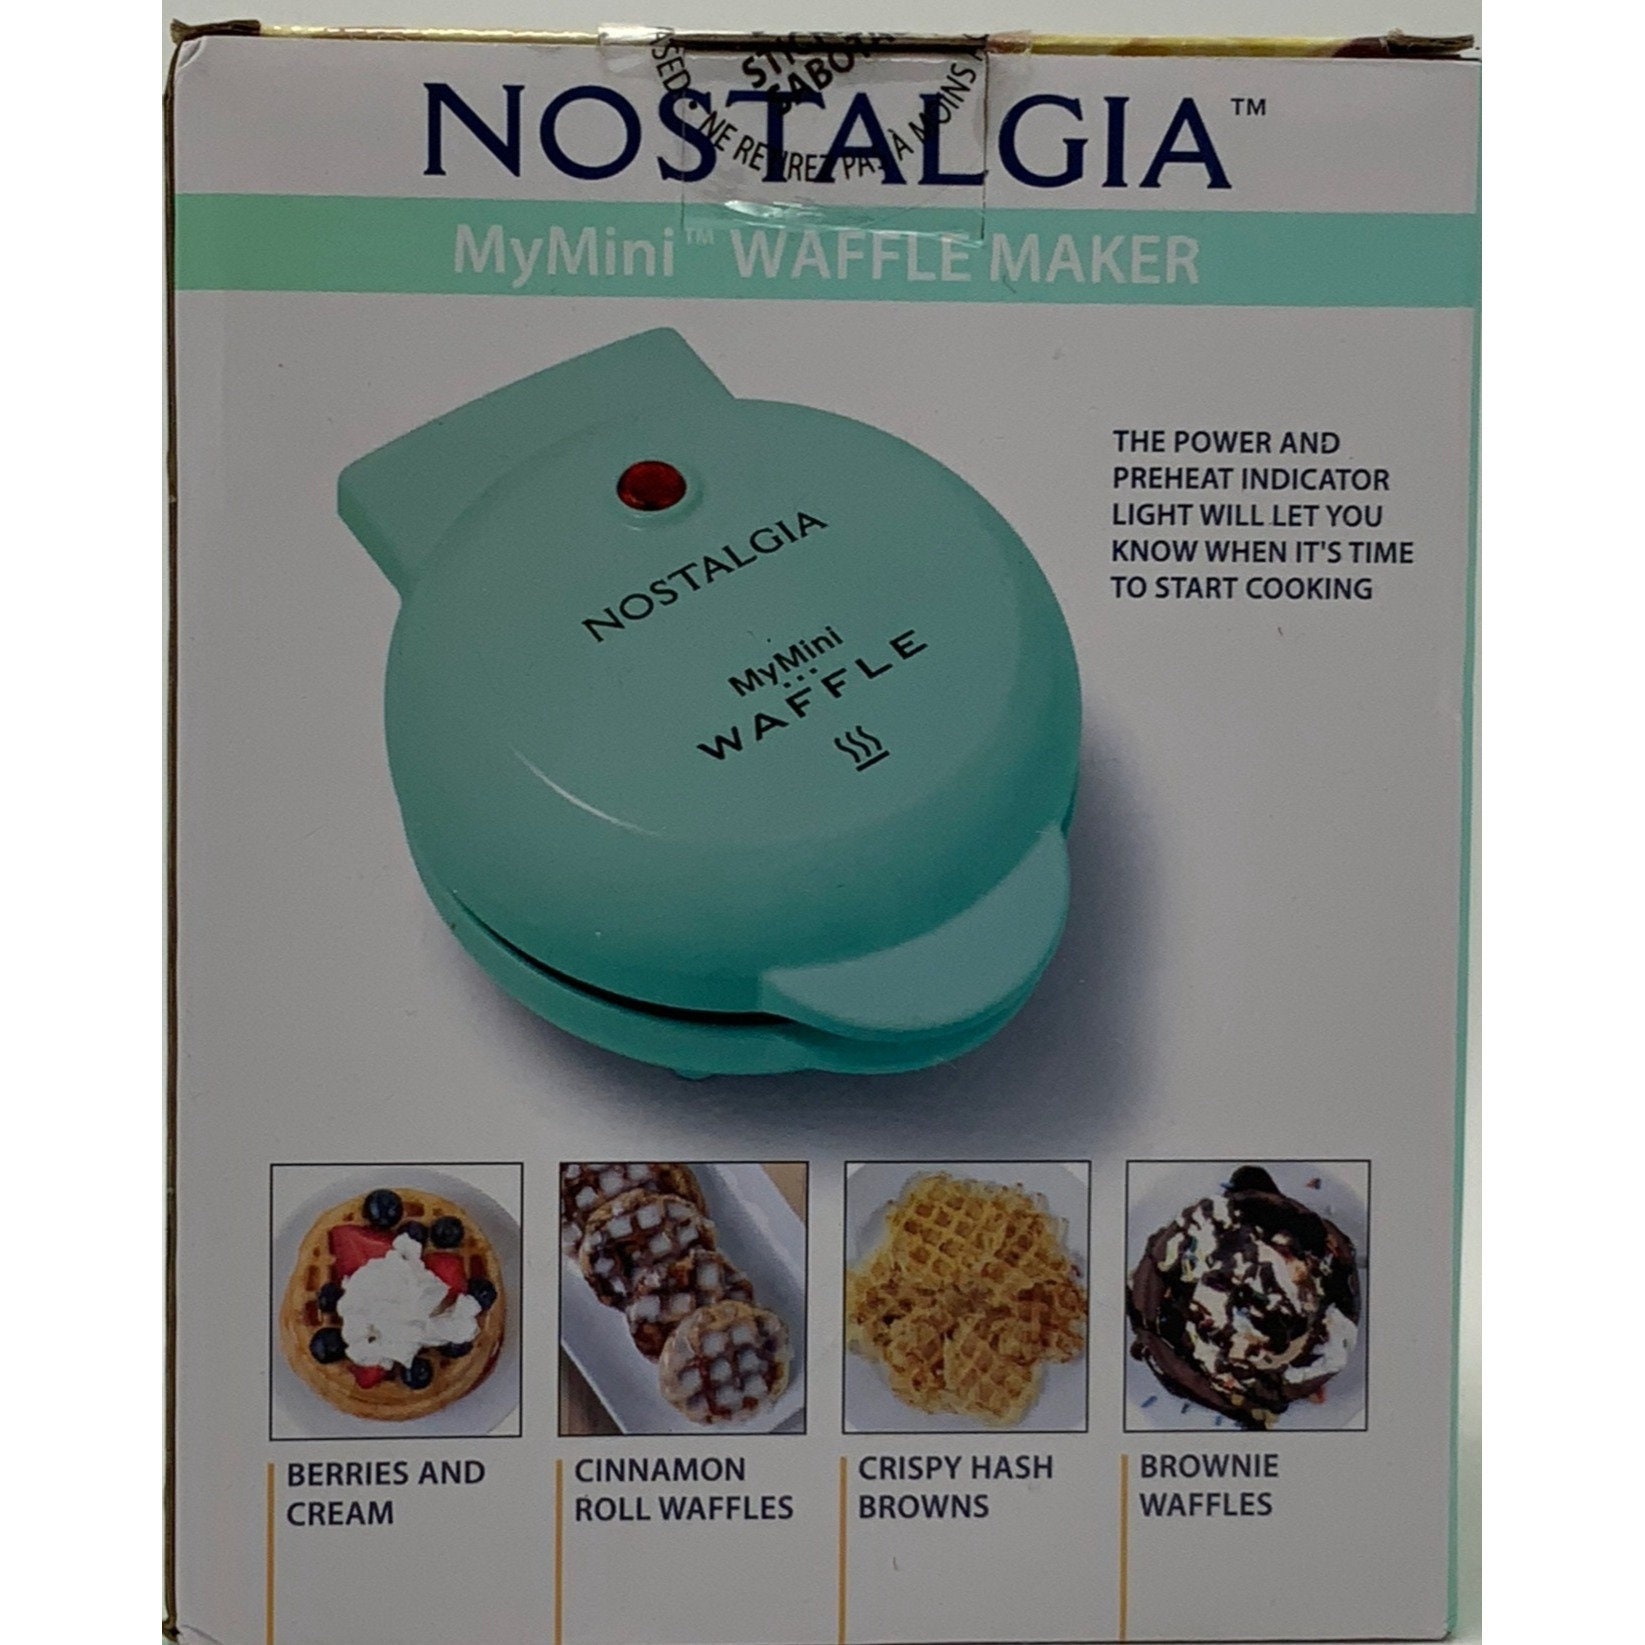 Nostalgia Mini waflera turquesa / Nostalgia Mymini Waflera maker 5¨compacto